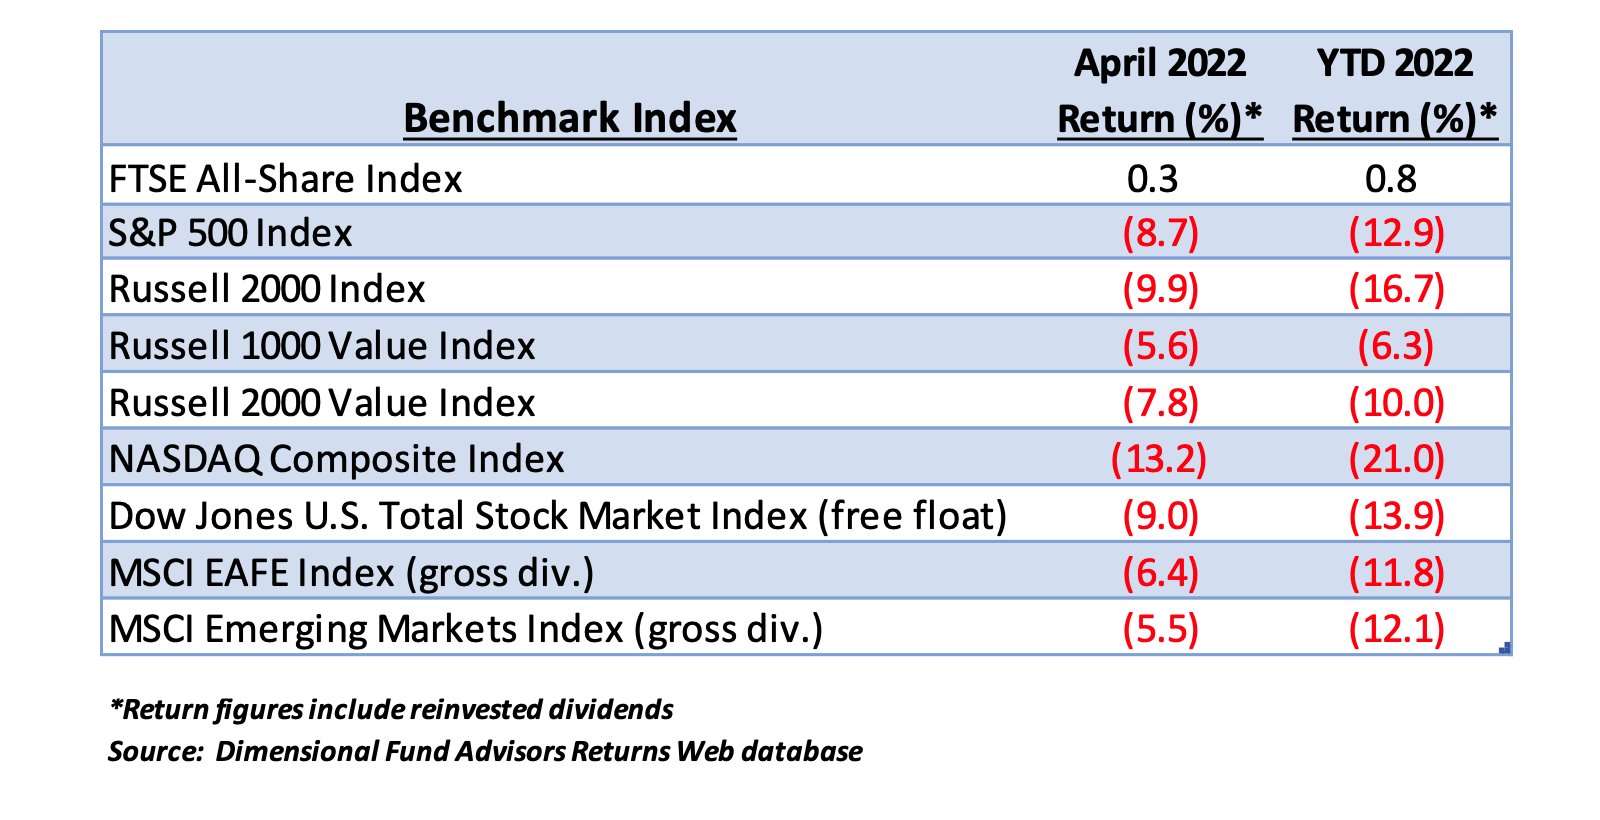 April 2022 Benchmark Index Returns